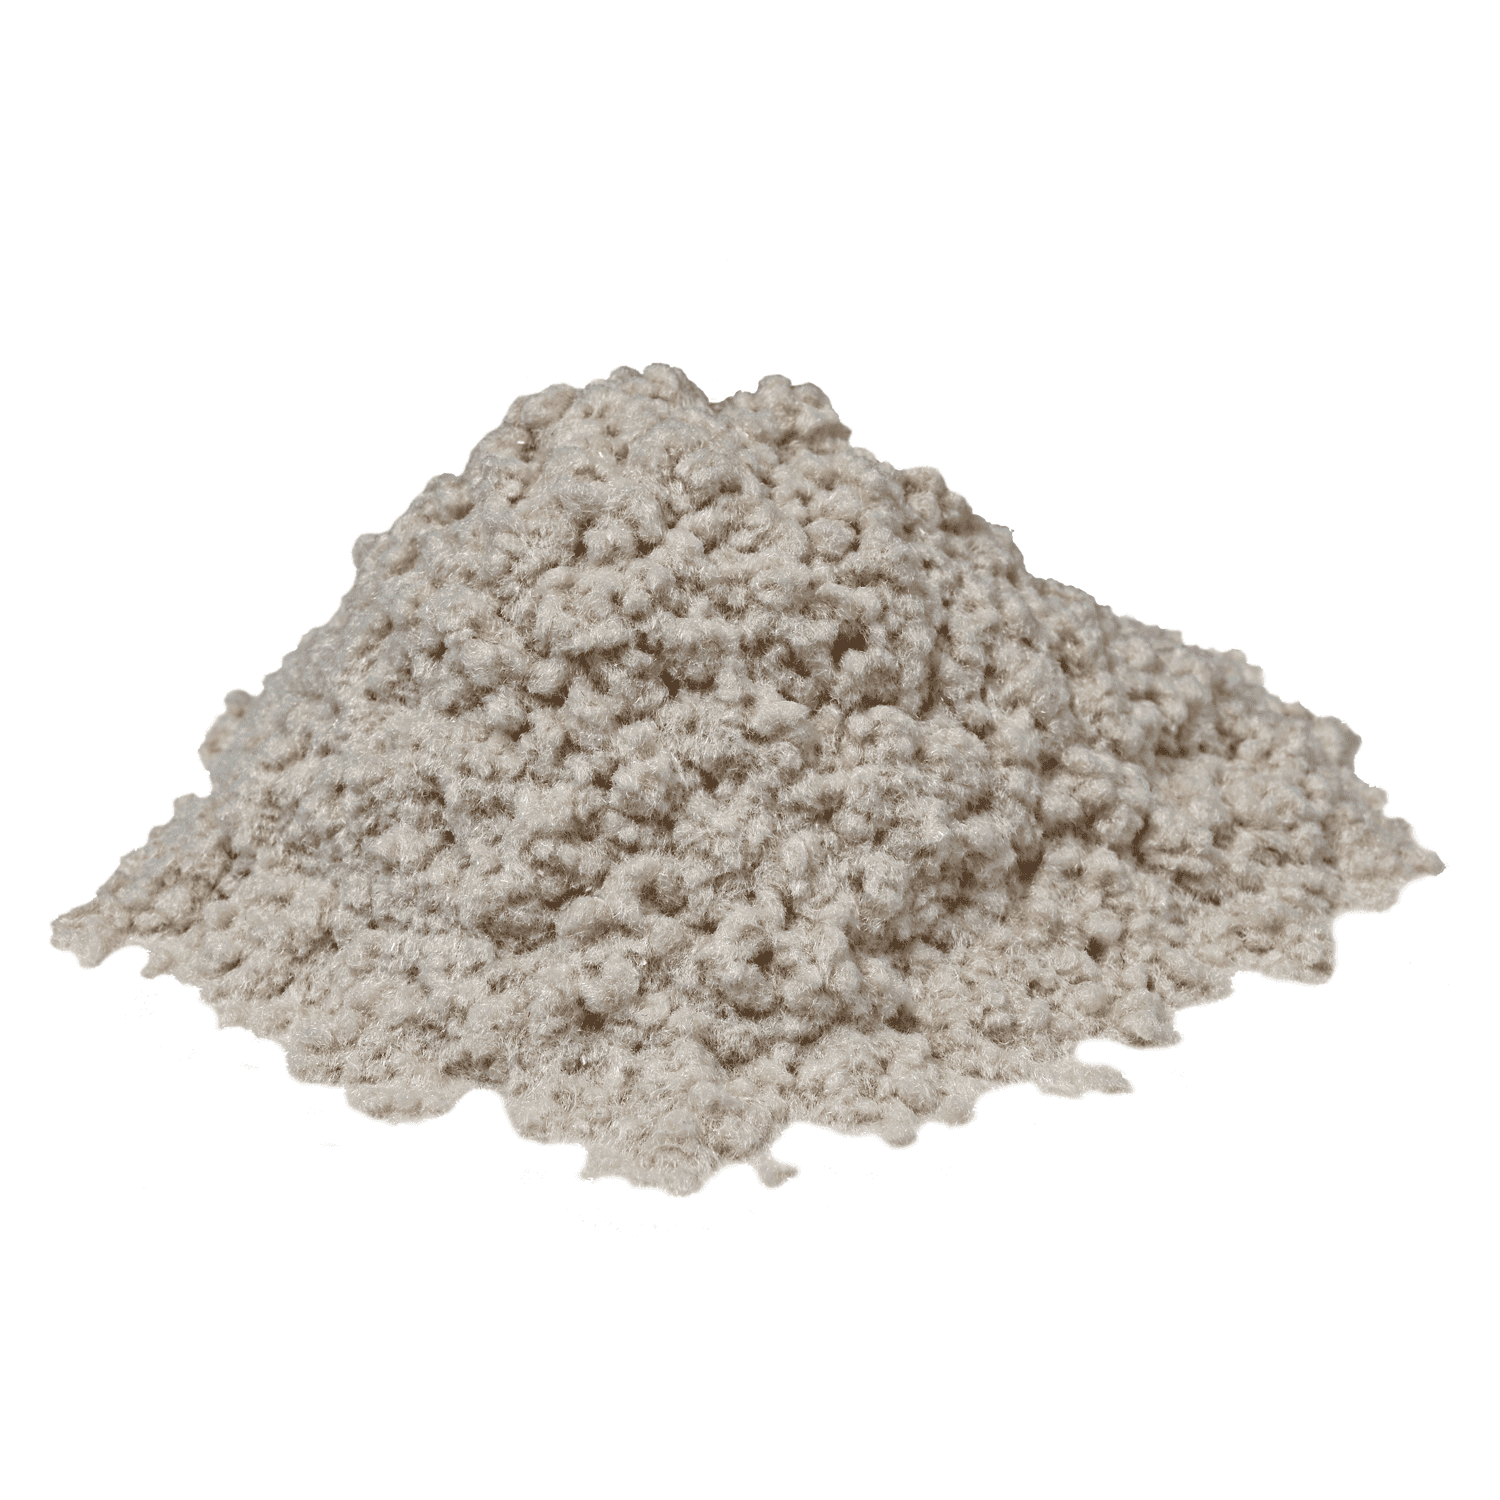 Powder Flocking - Matuska Taxidermy Supply Company